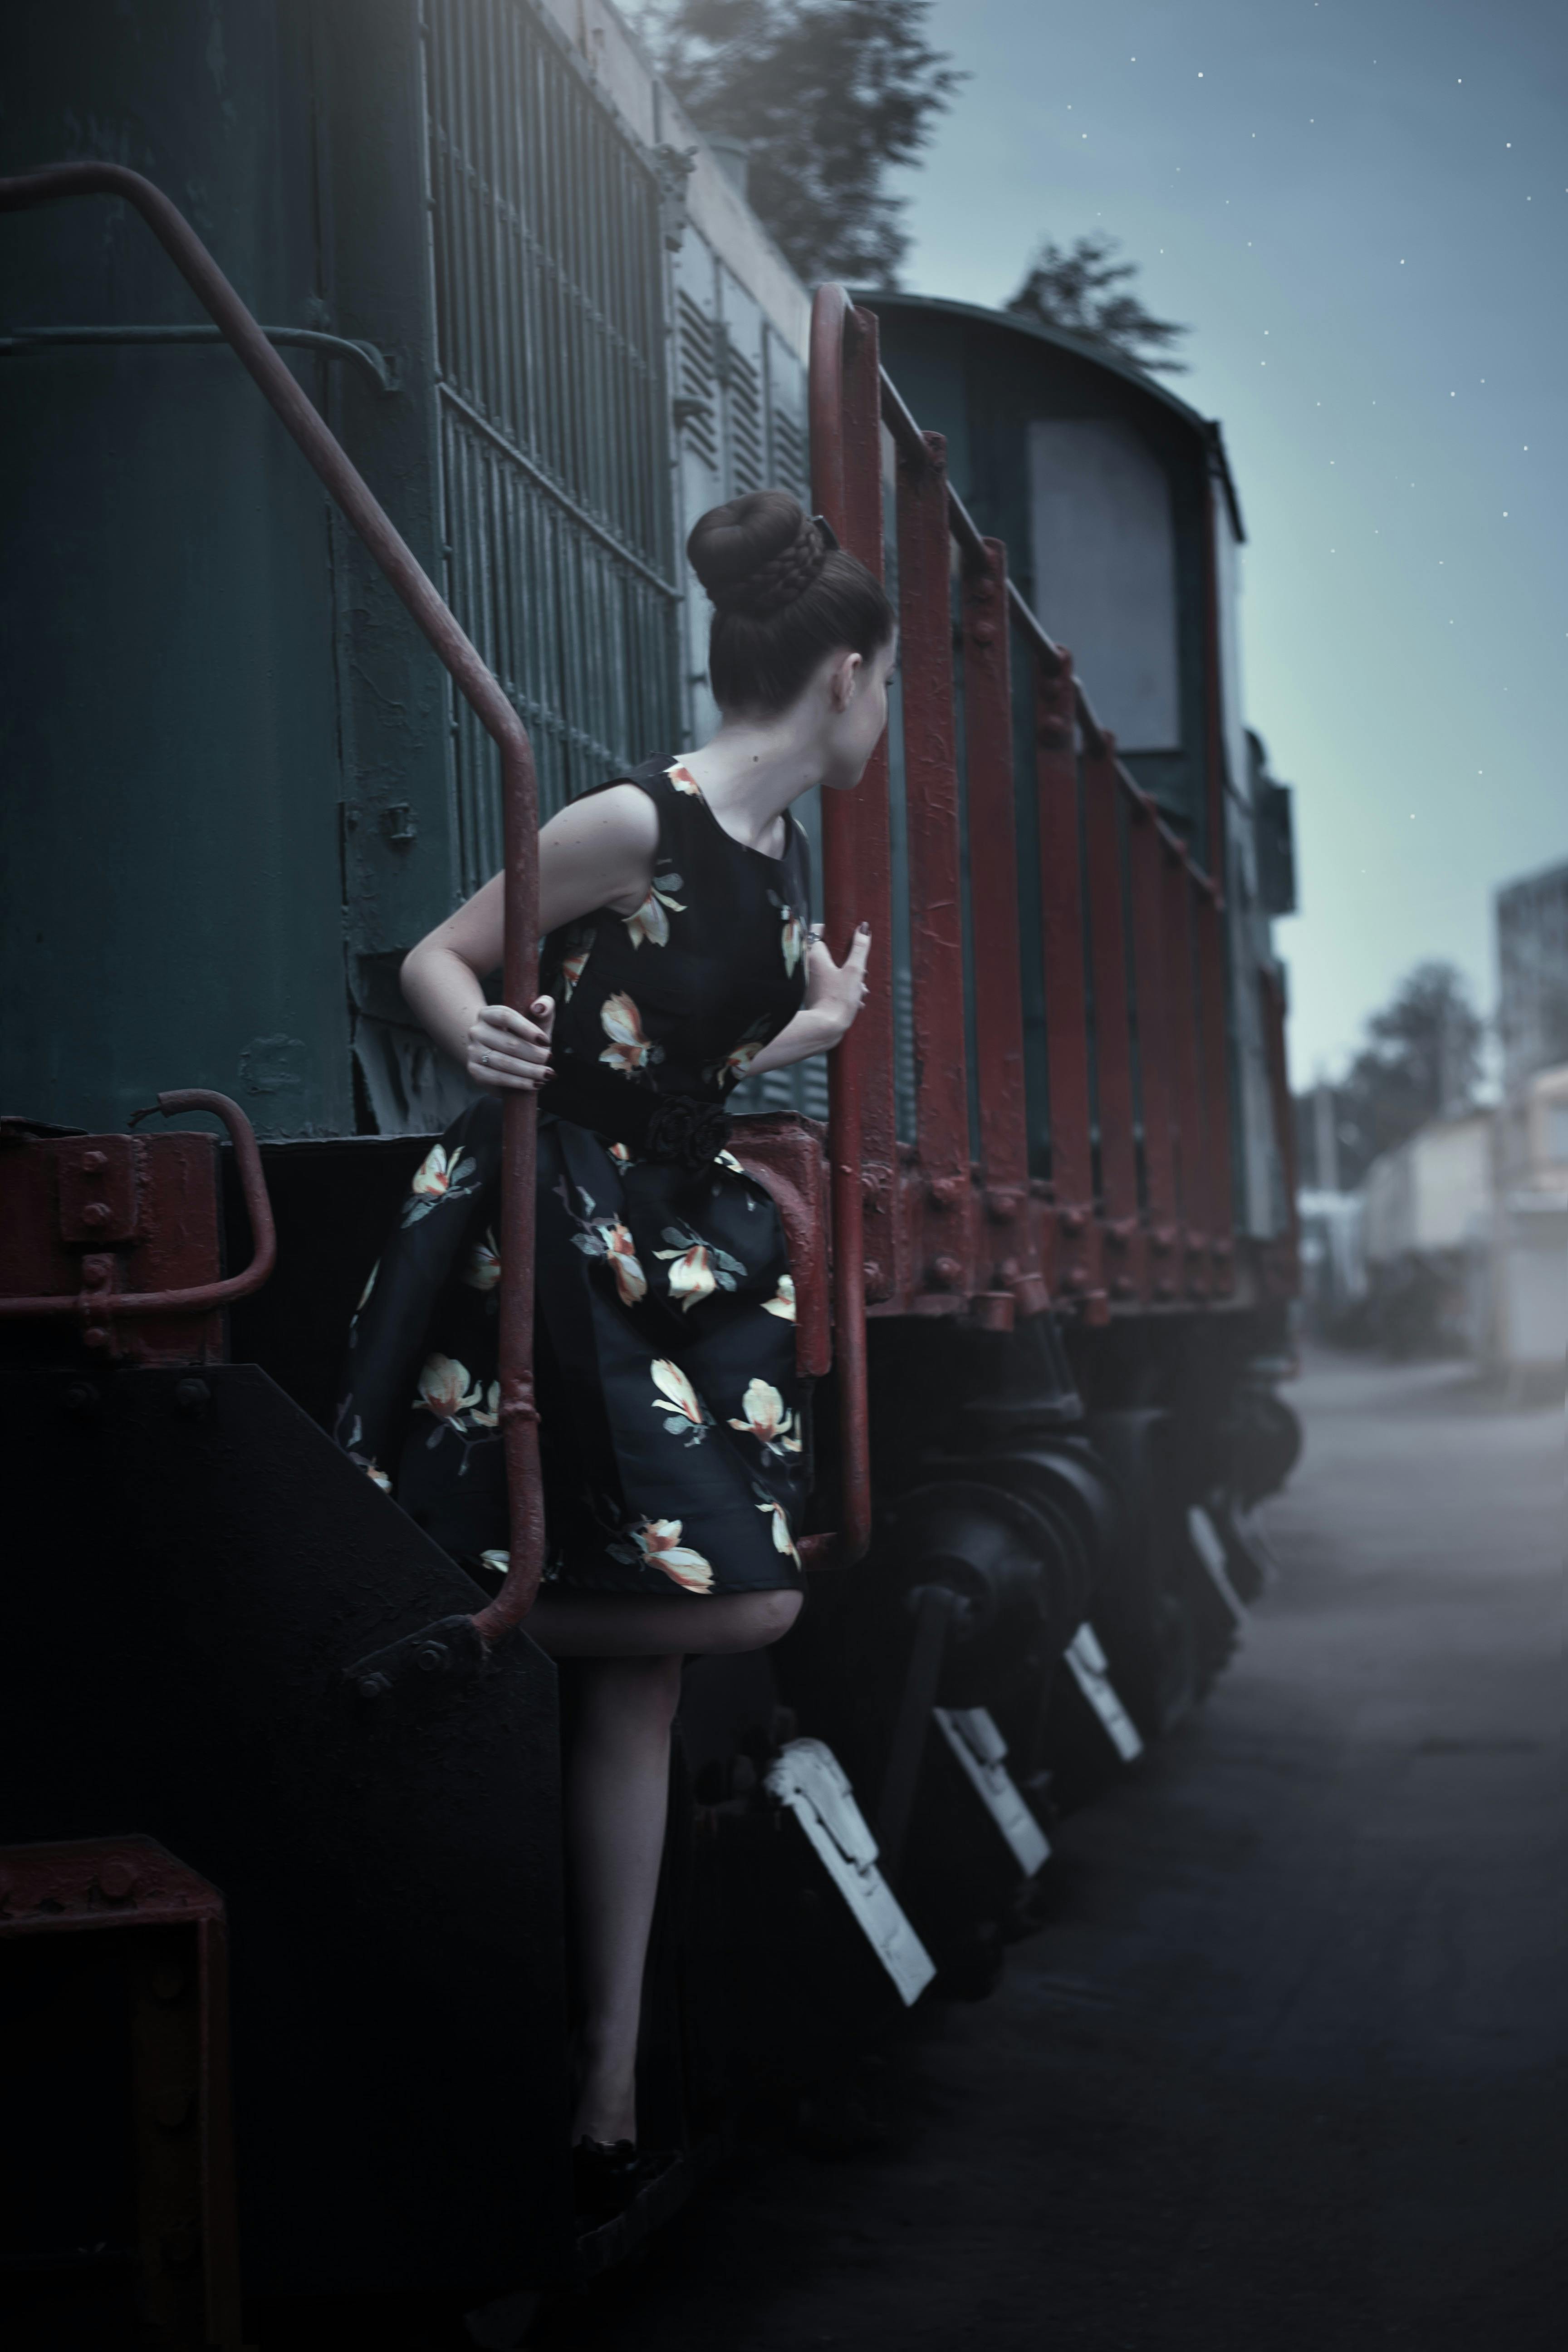 Woman in Black Sleeveless Dress Standing Beside Train \u00b7 Free Stock Photo